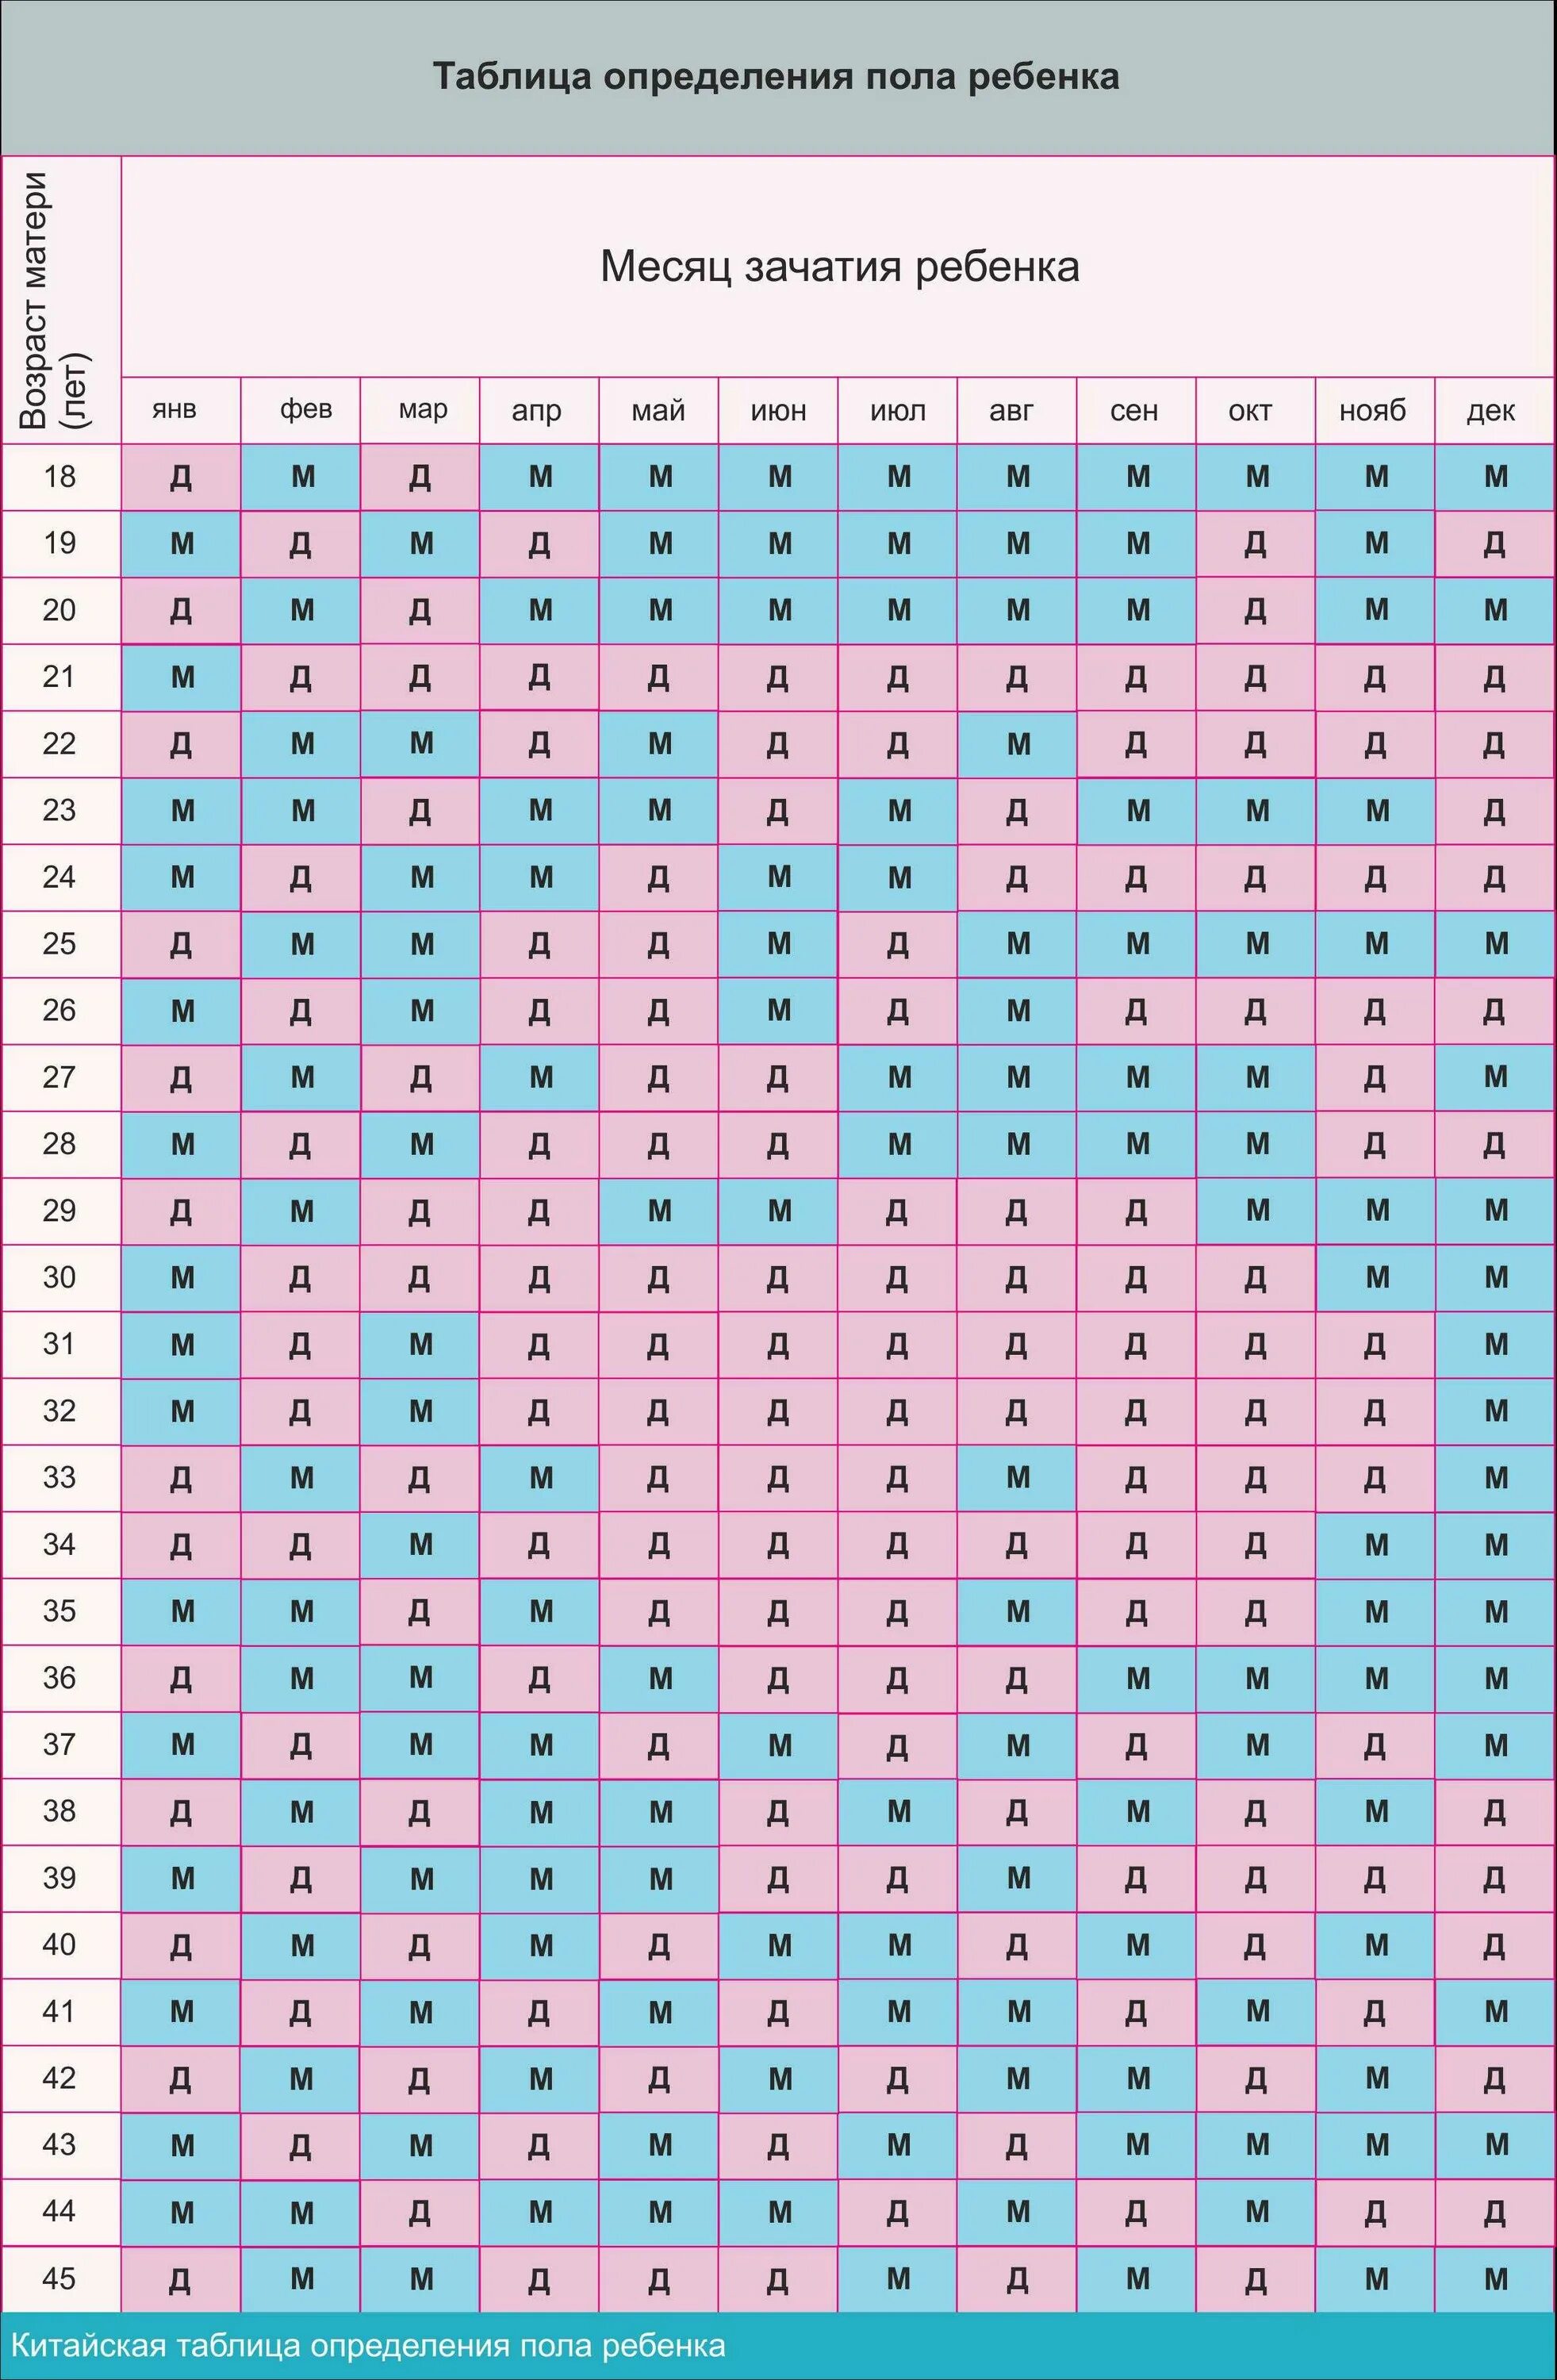 Stirni aniqlash. Таблица беременности пол ребенка 2022. Древне китайская таблица вычисления пола ребенка. Японская таблица определения пола ребенка по возрасту матери и отца. Таблица беременности пол ребенка китайская таблица.